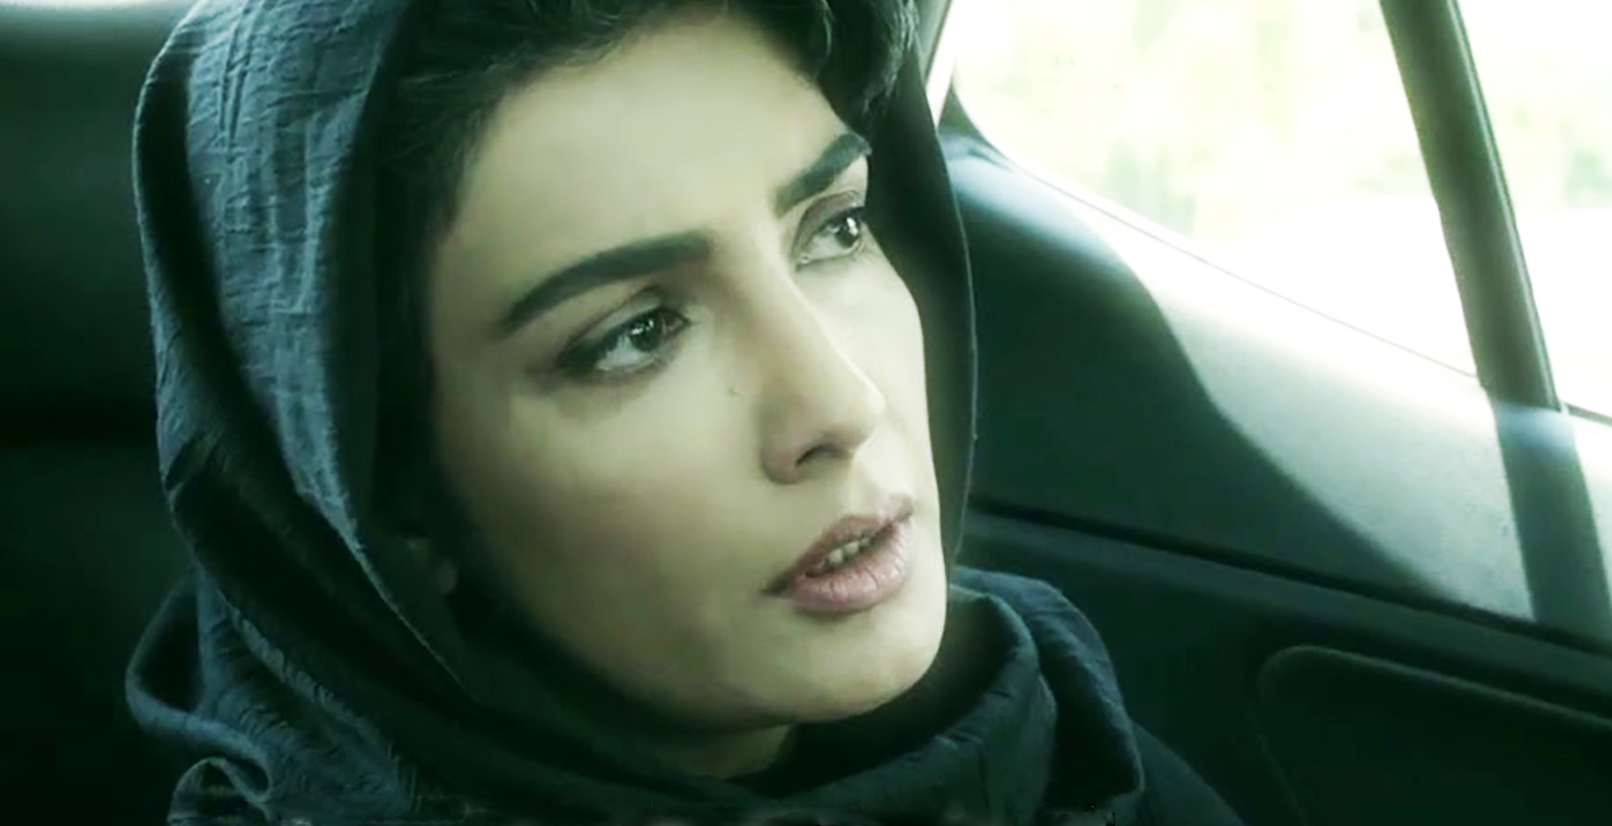  سریال شبکه نمایش خانگی ممنوعه به کارگردانی امیر پورکیان